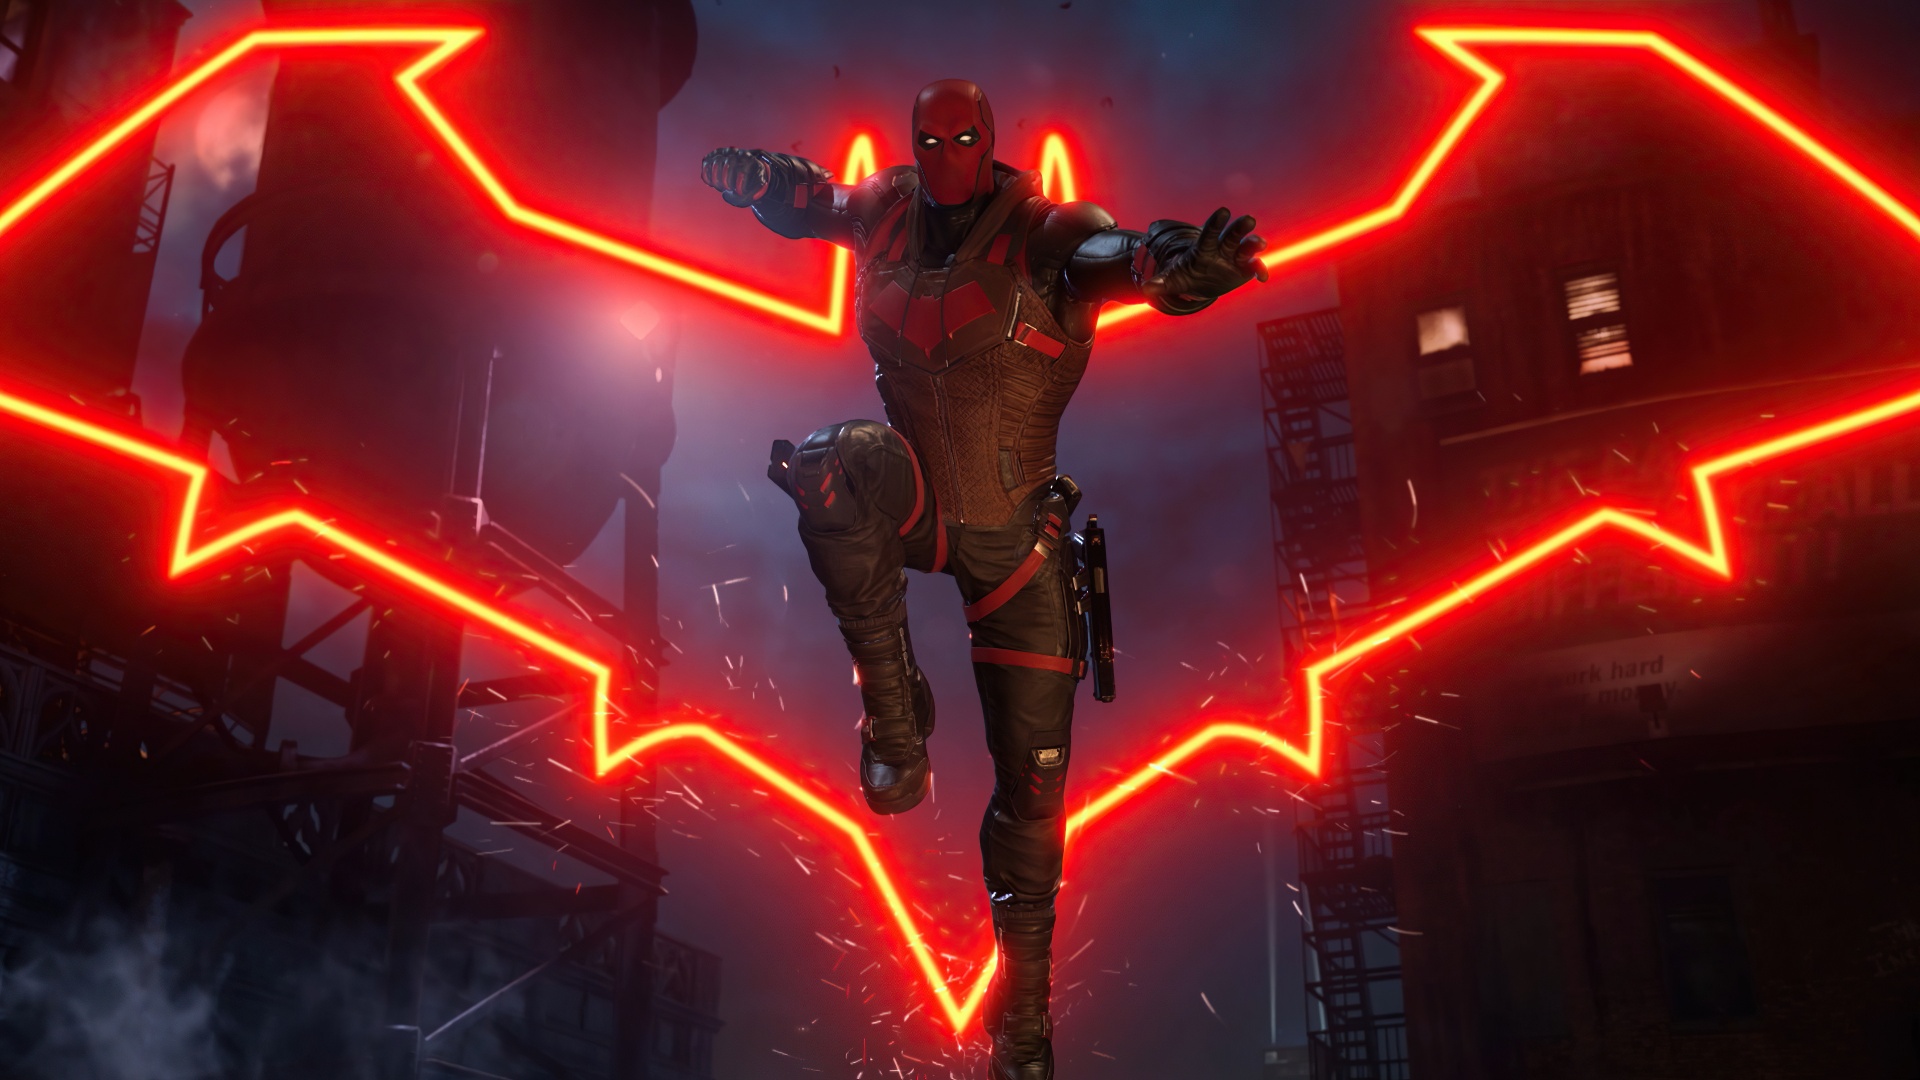 Red Hood 4K Wallpaper, Gotham Knights, 2021 Games, PlayStation 5